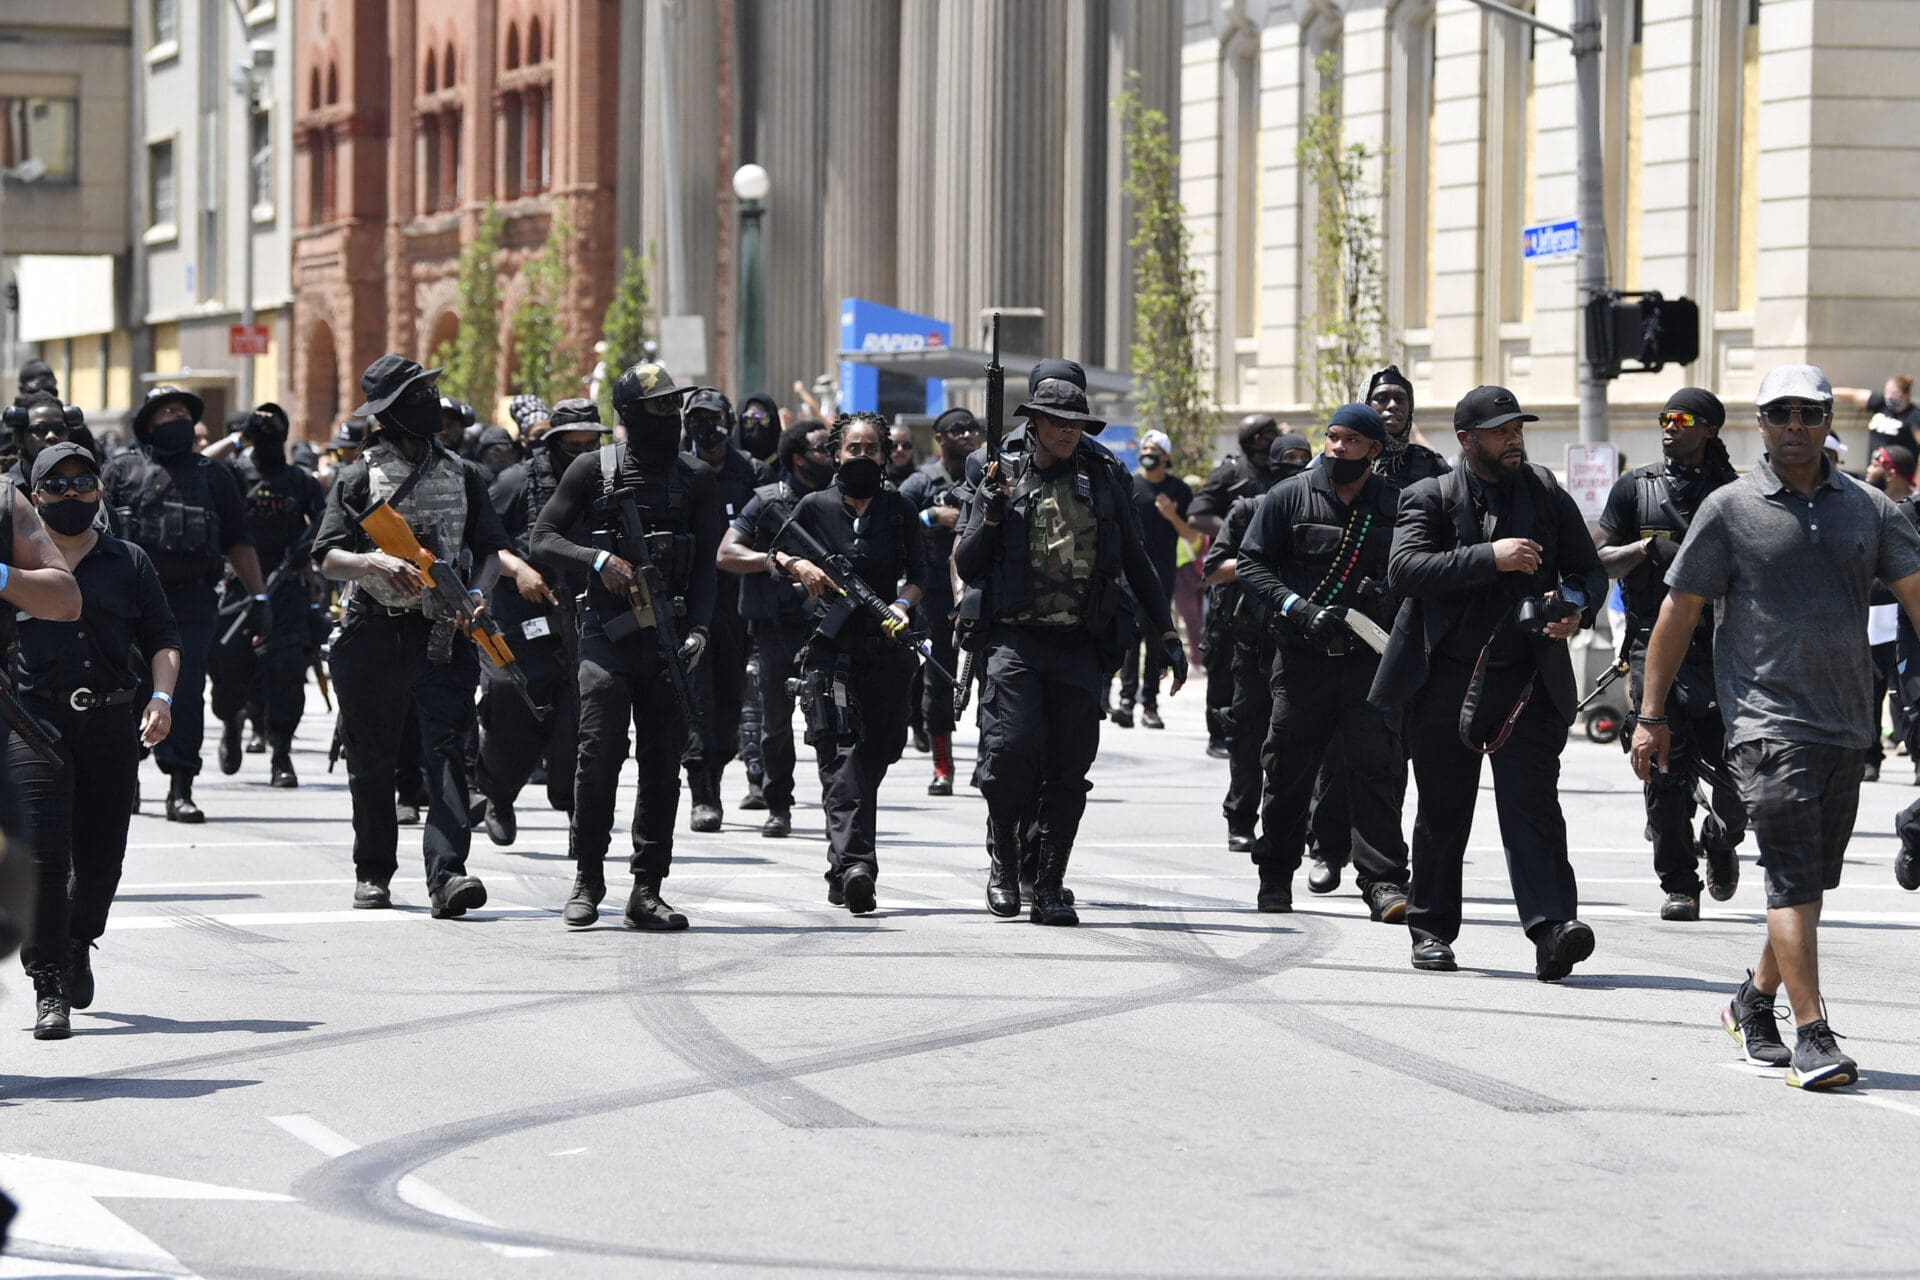 NFAC armed militia Louisville